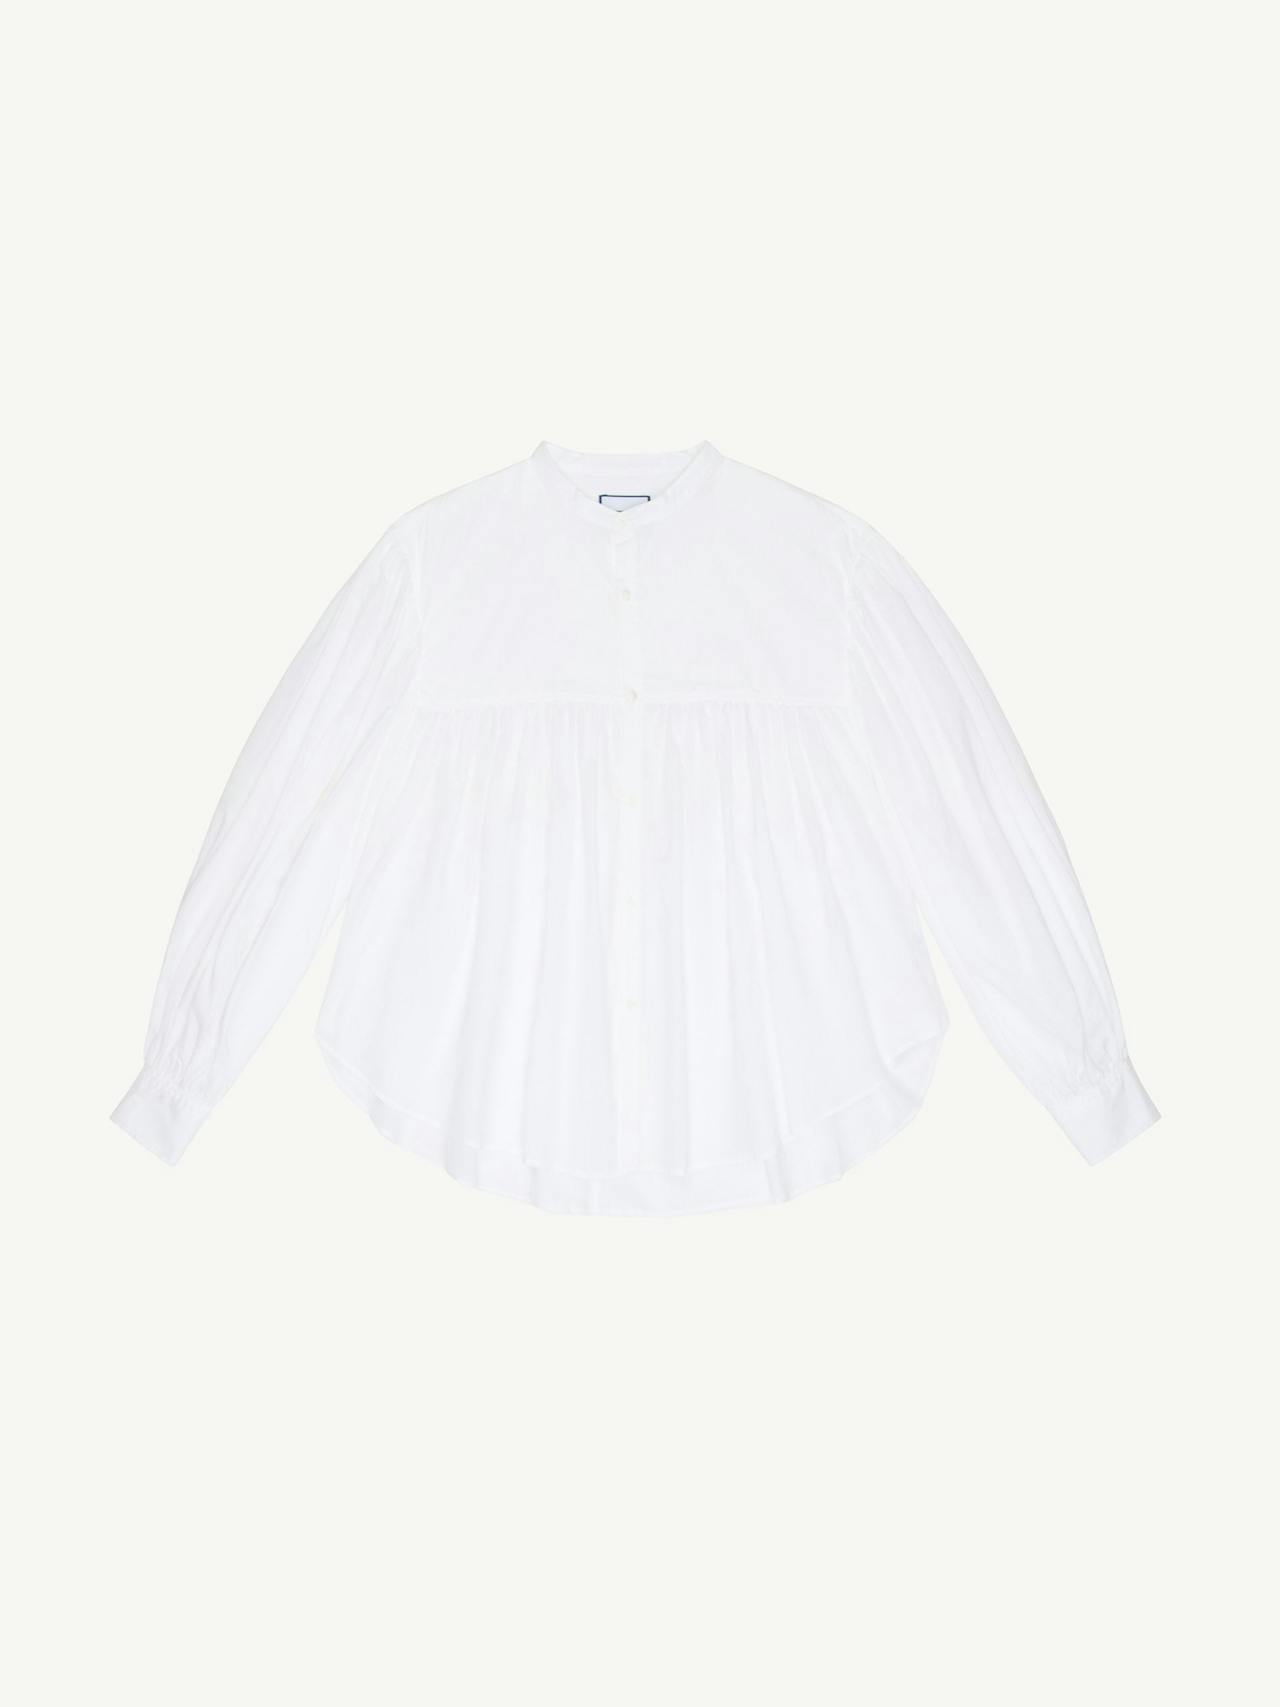 The Daphne shirt cotton voile, white